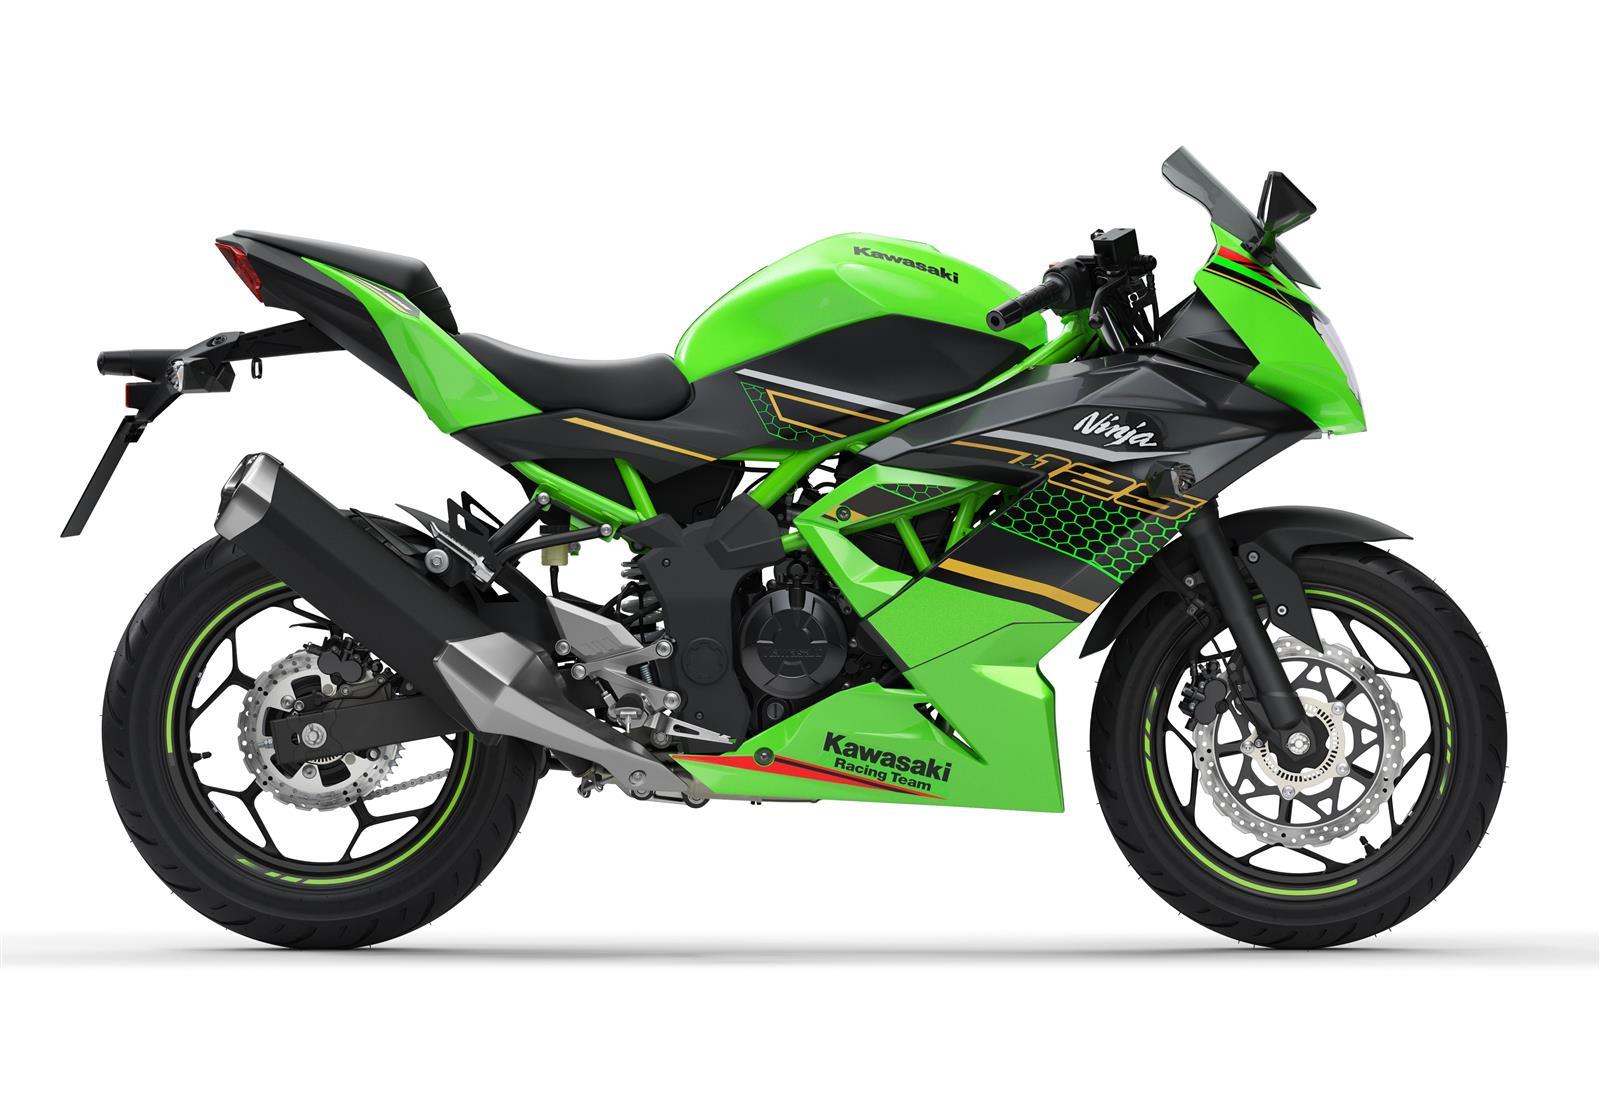 2021 Kawasaki Ninja 125 Specs and Expected Price in India